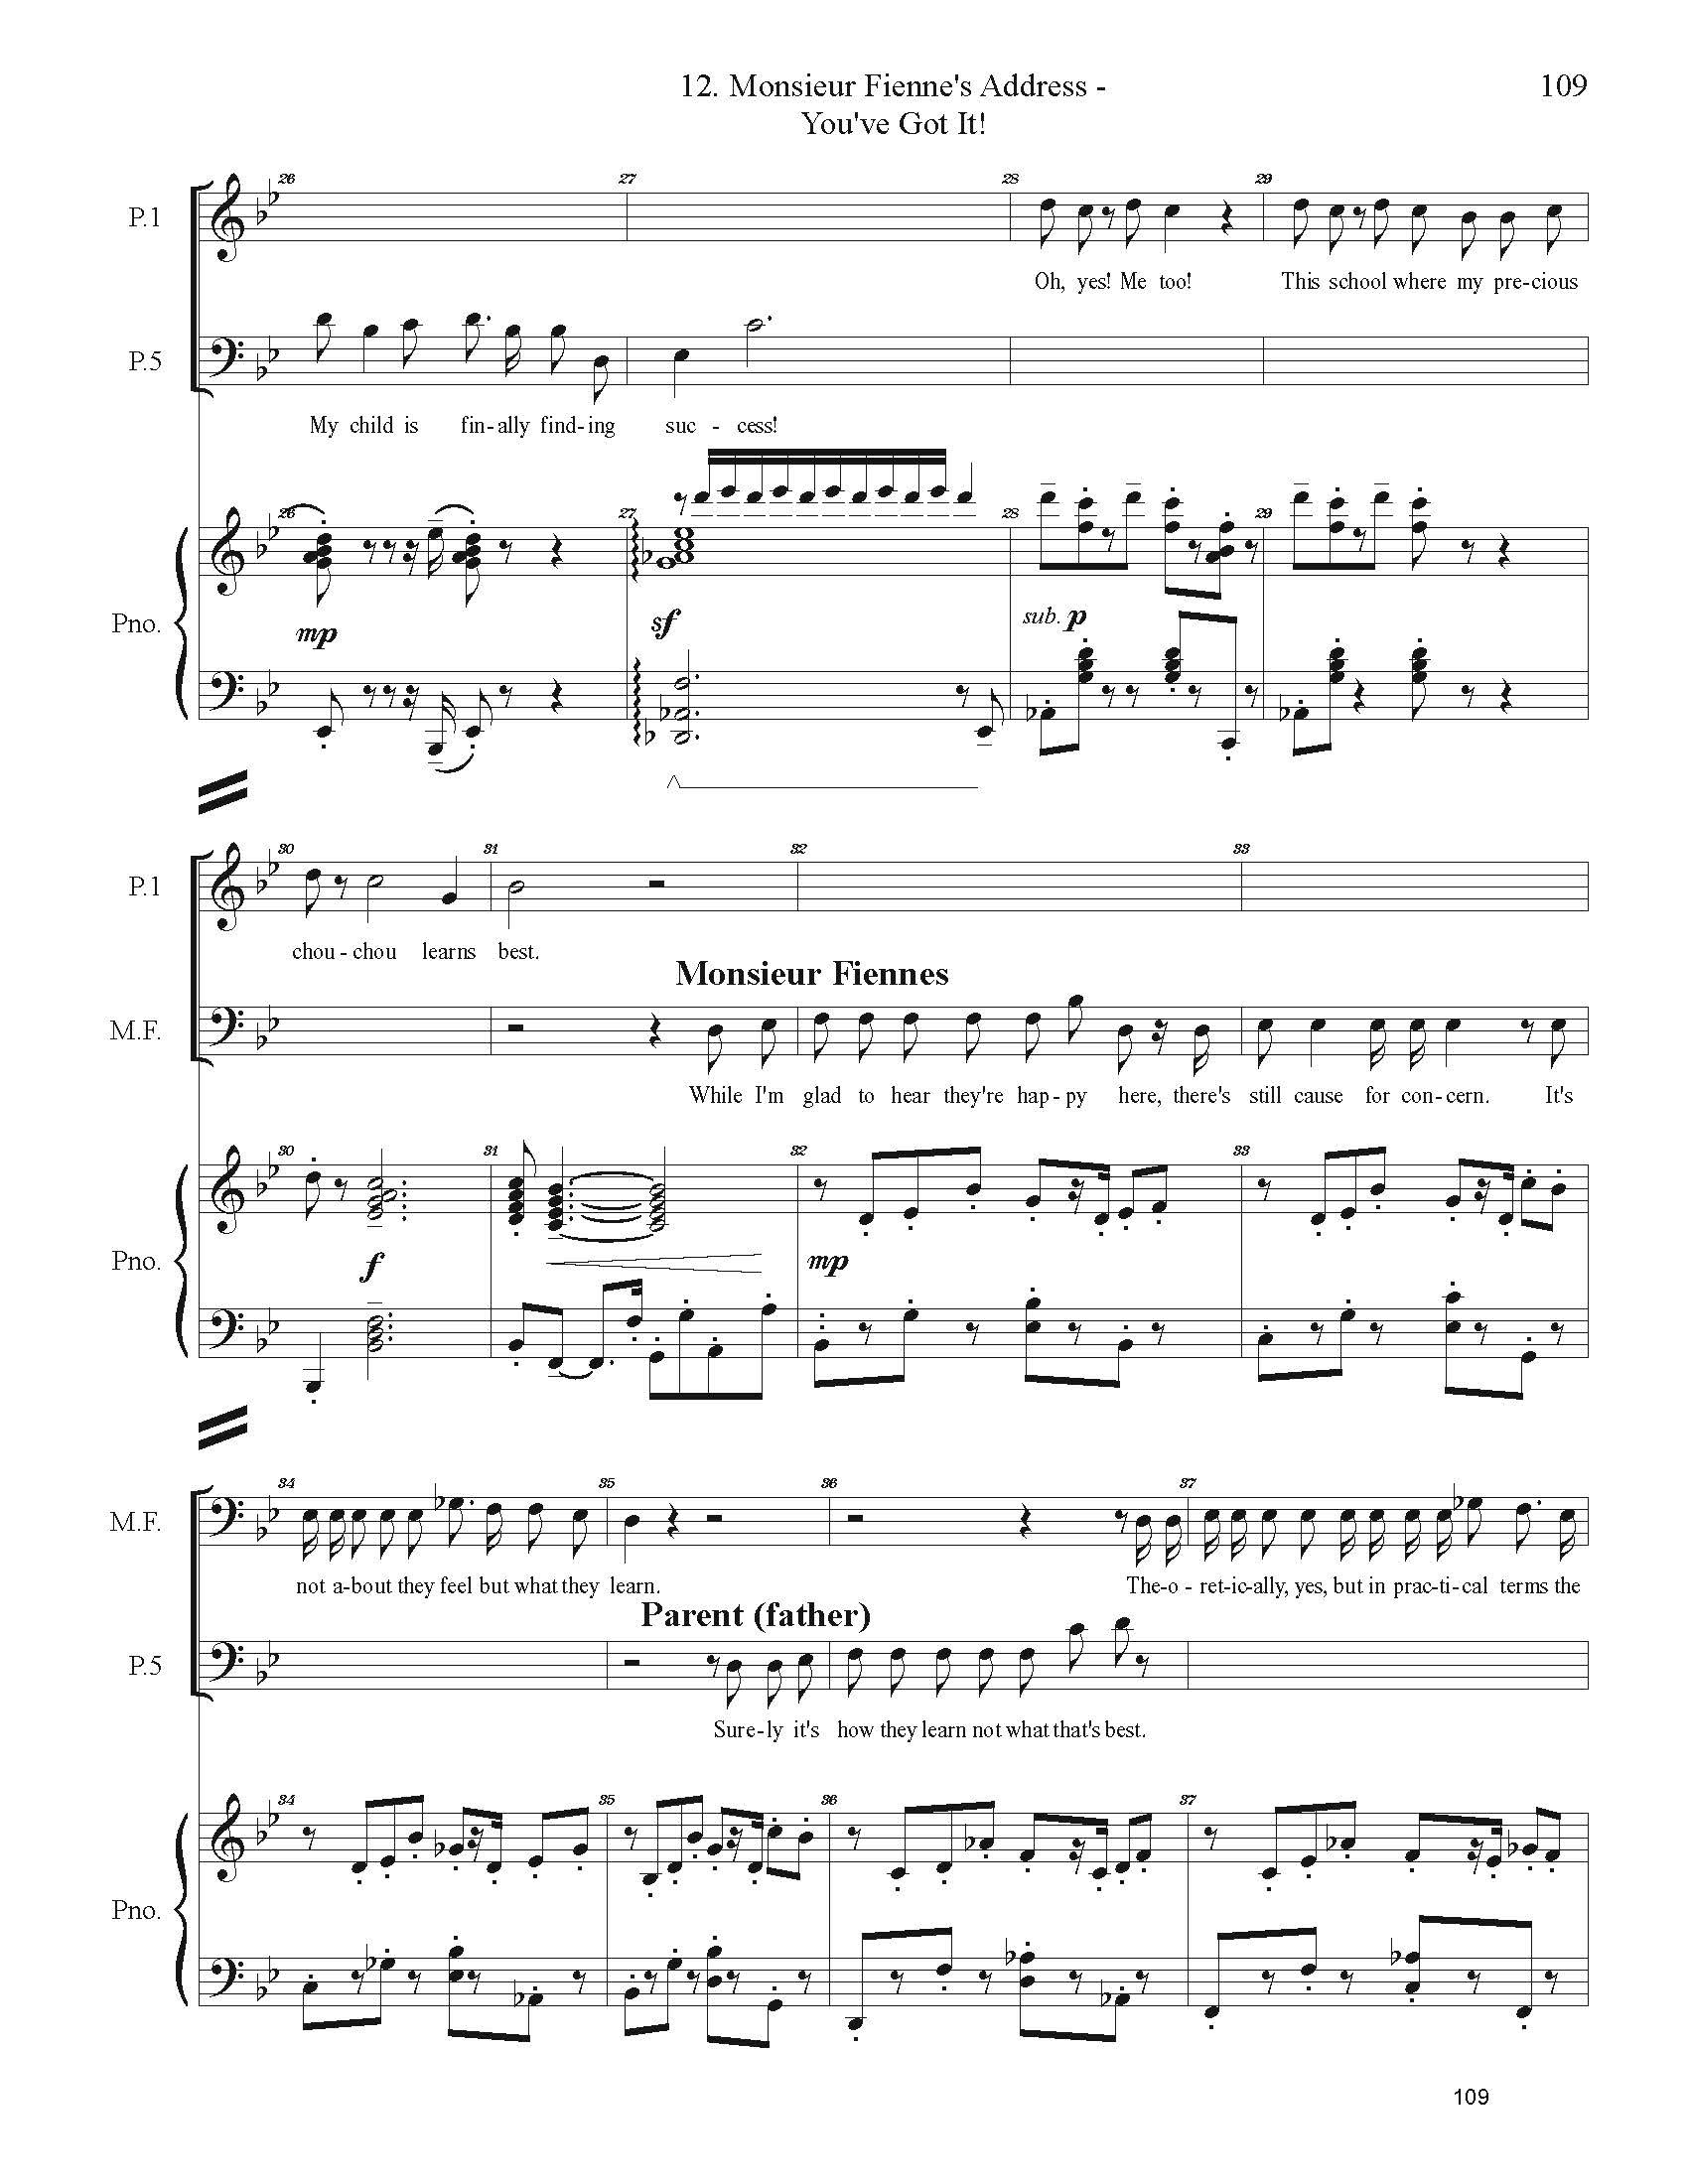 FULL PIANO VOCAL SCORE DRAFT 1 - Score_Page_109.jpg